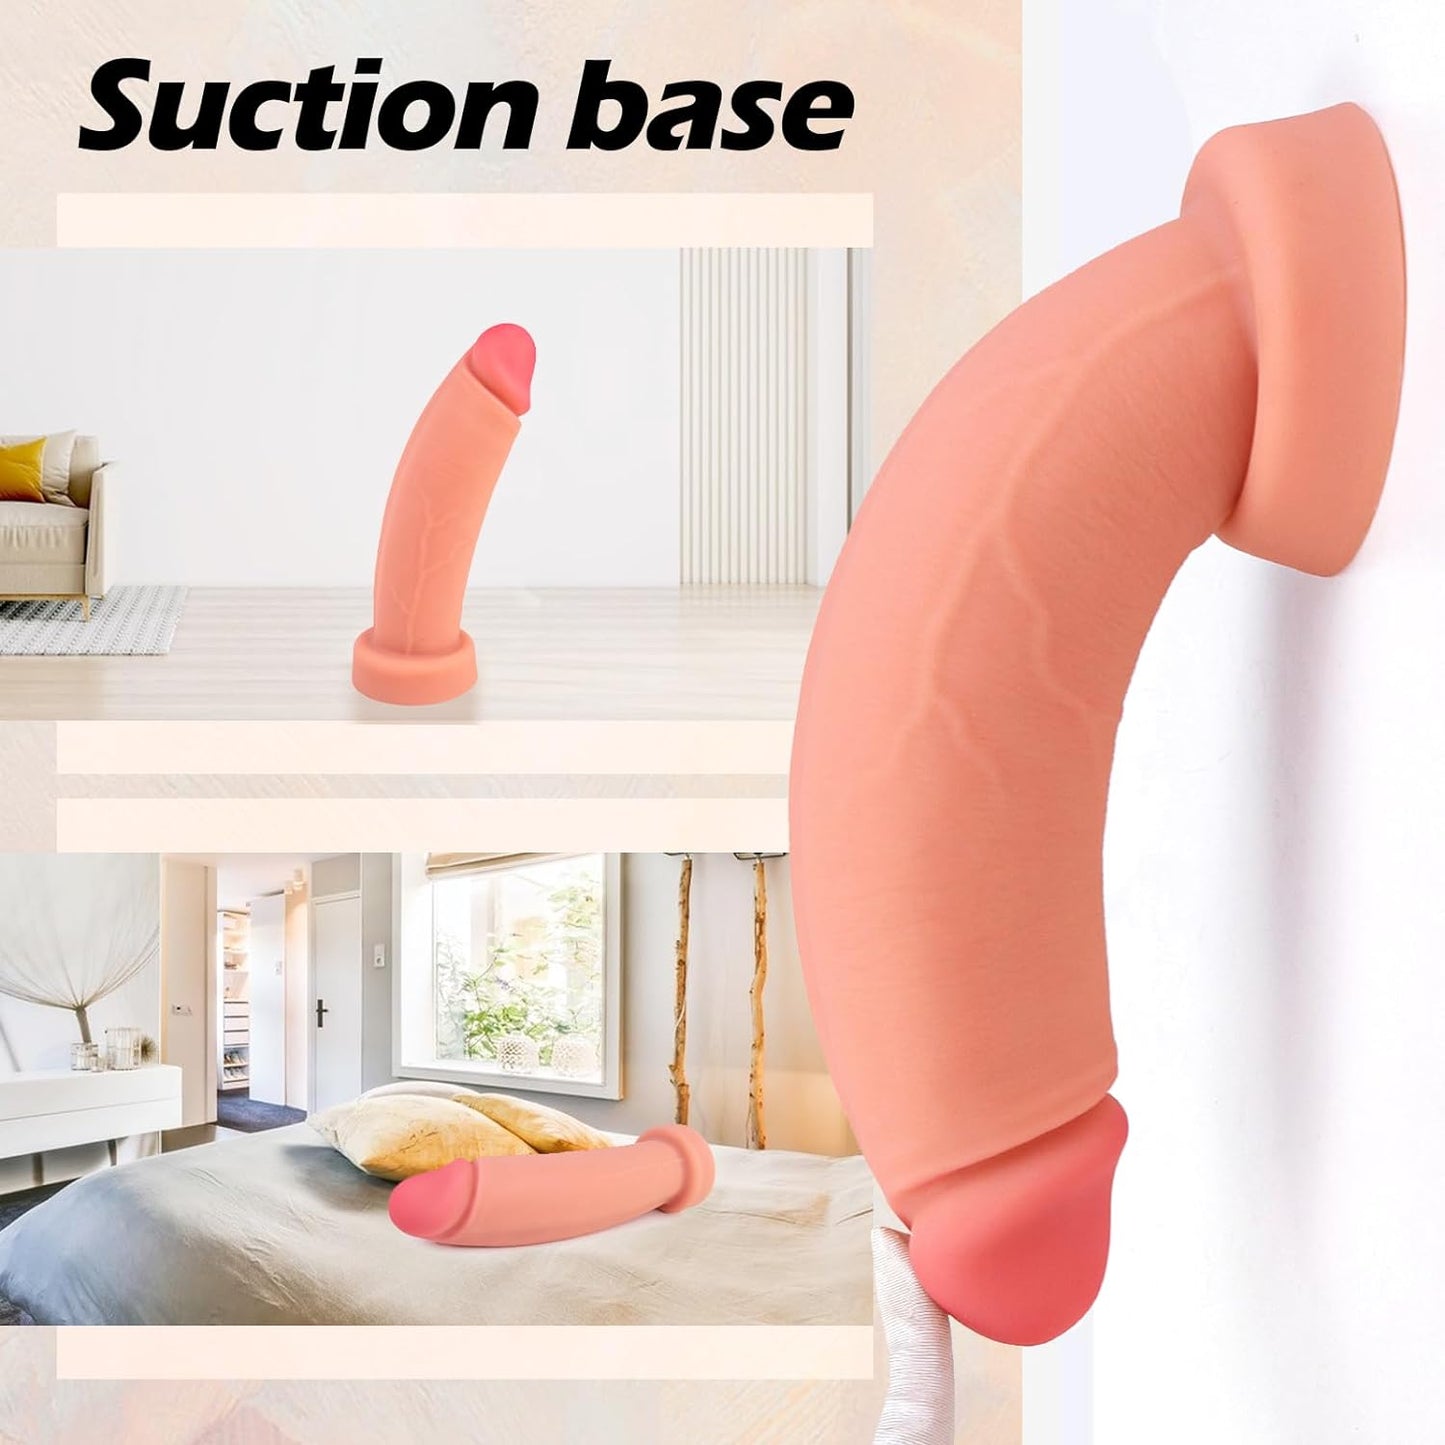 TaRiss's Plug Realistic Dildo Big Thick Sex Toy